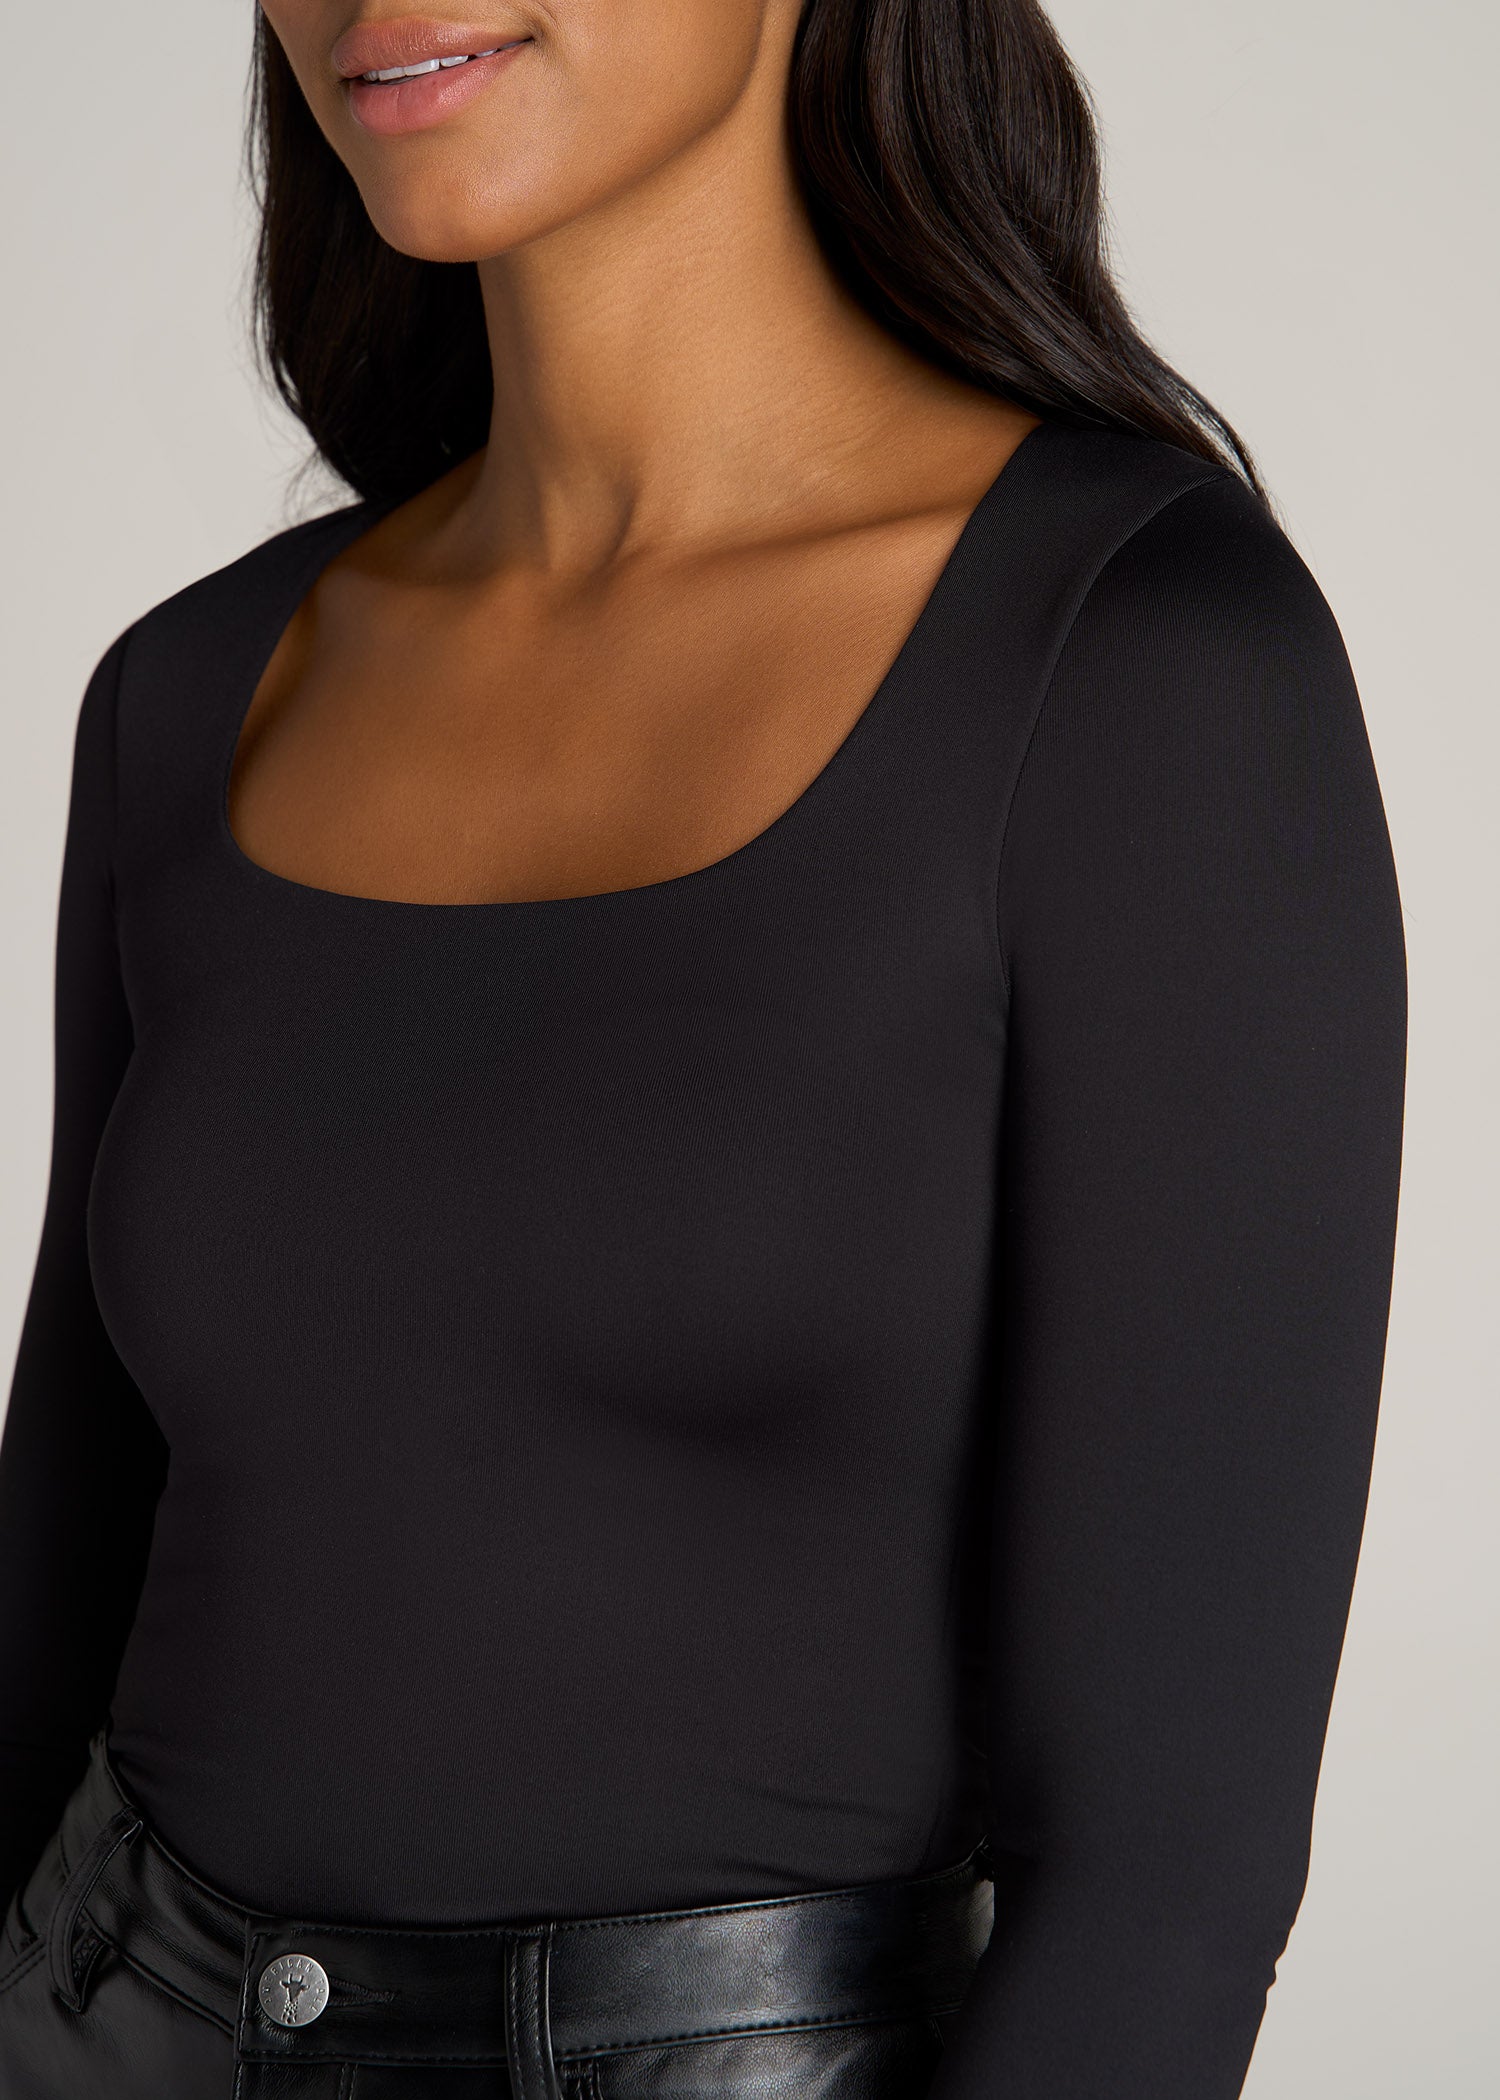 Black Buckle One Shoulder Bodysuit, Womens Tops